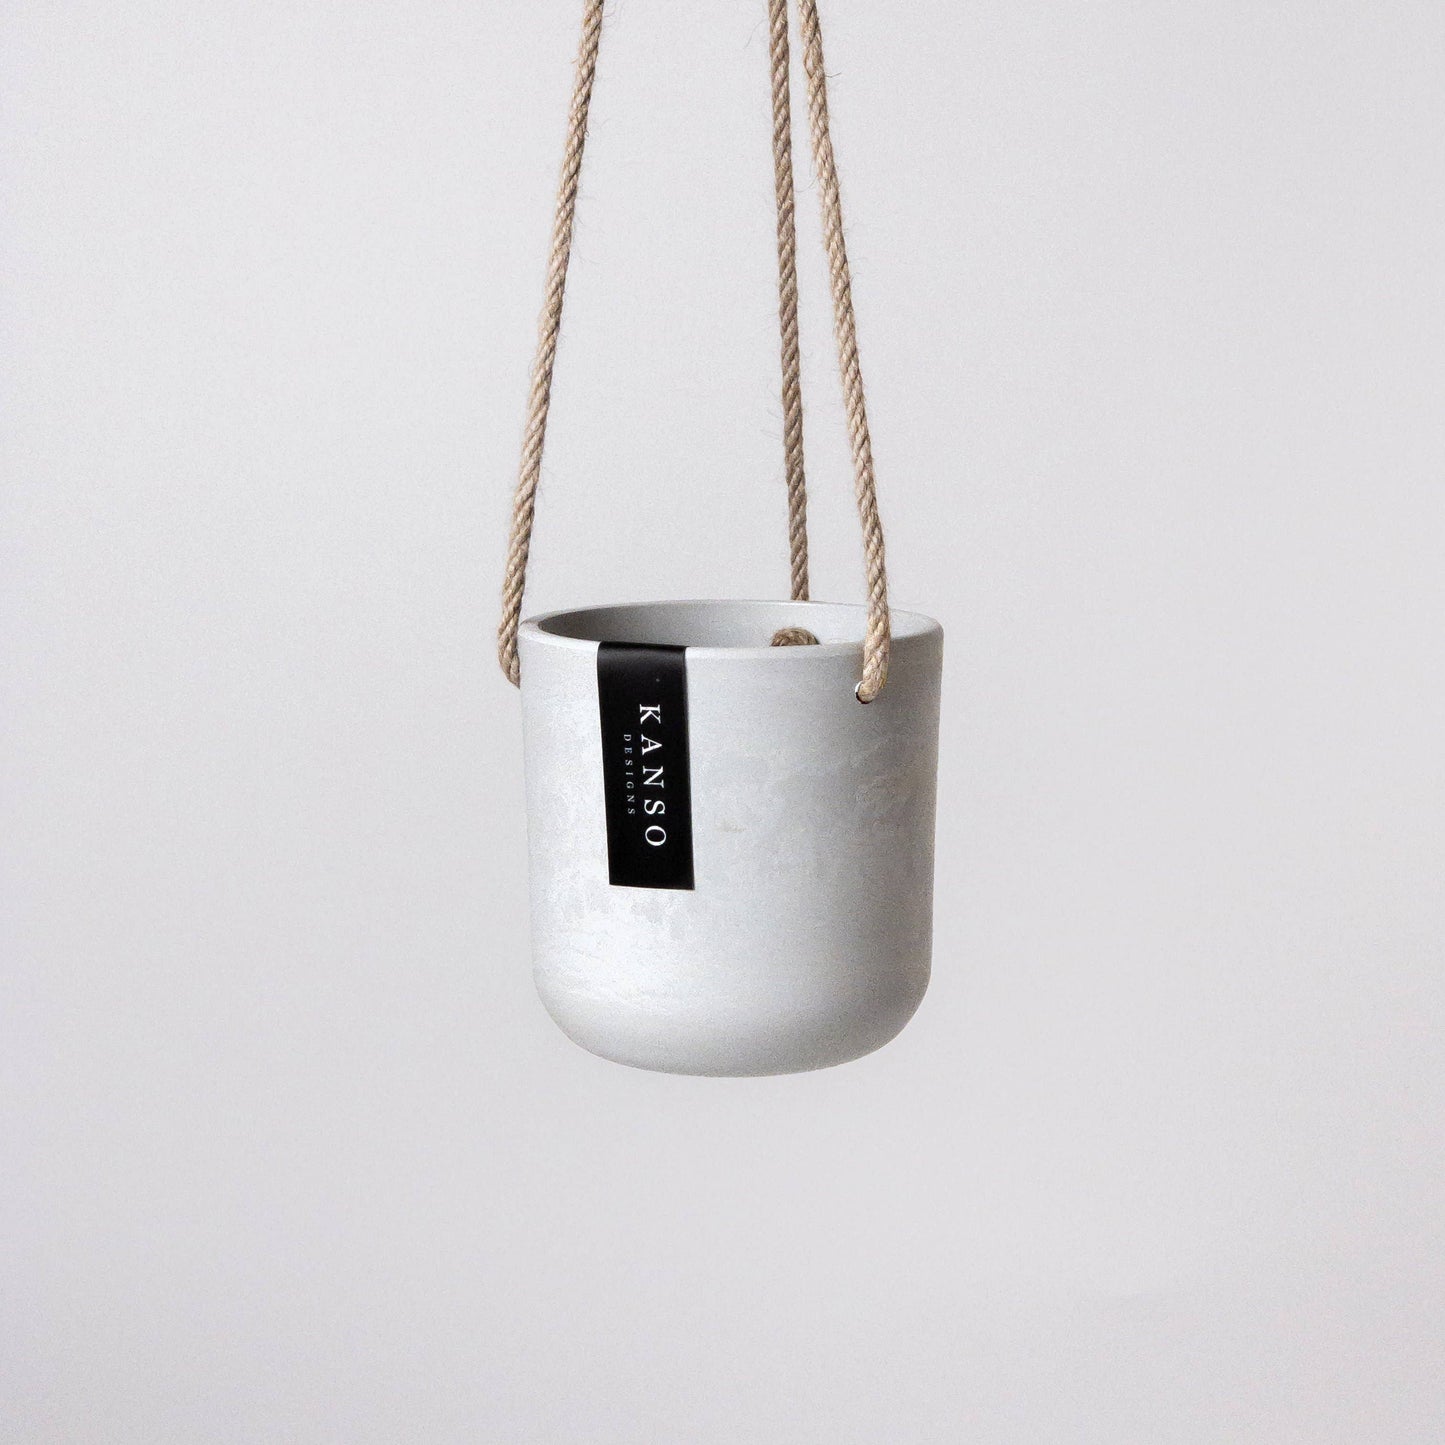 Kanso Designs 4" Signature Stone Hanging Planter Pot